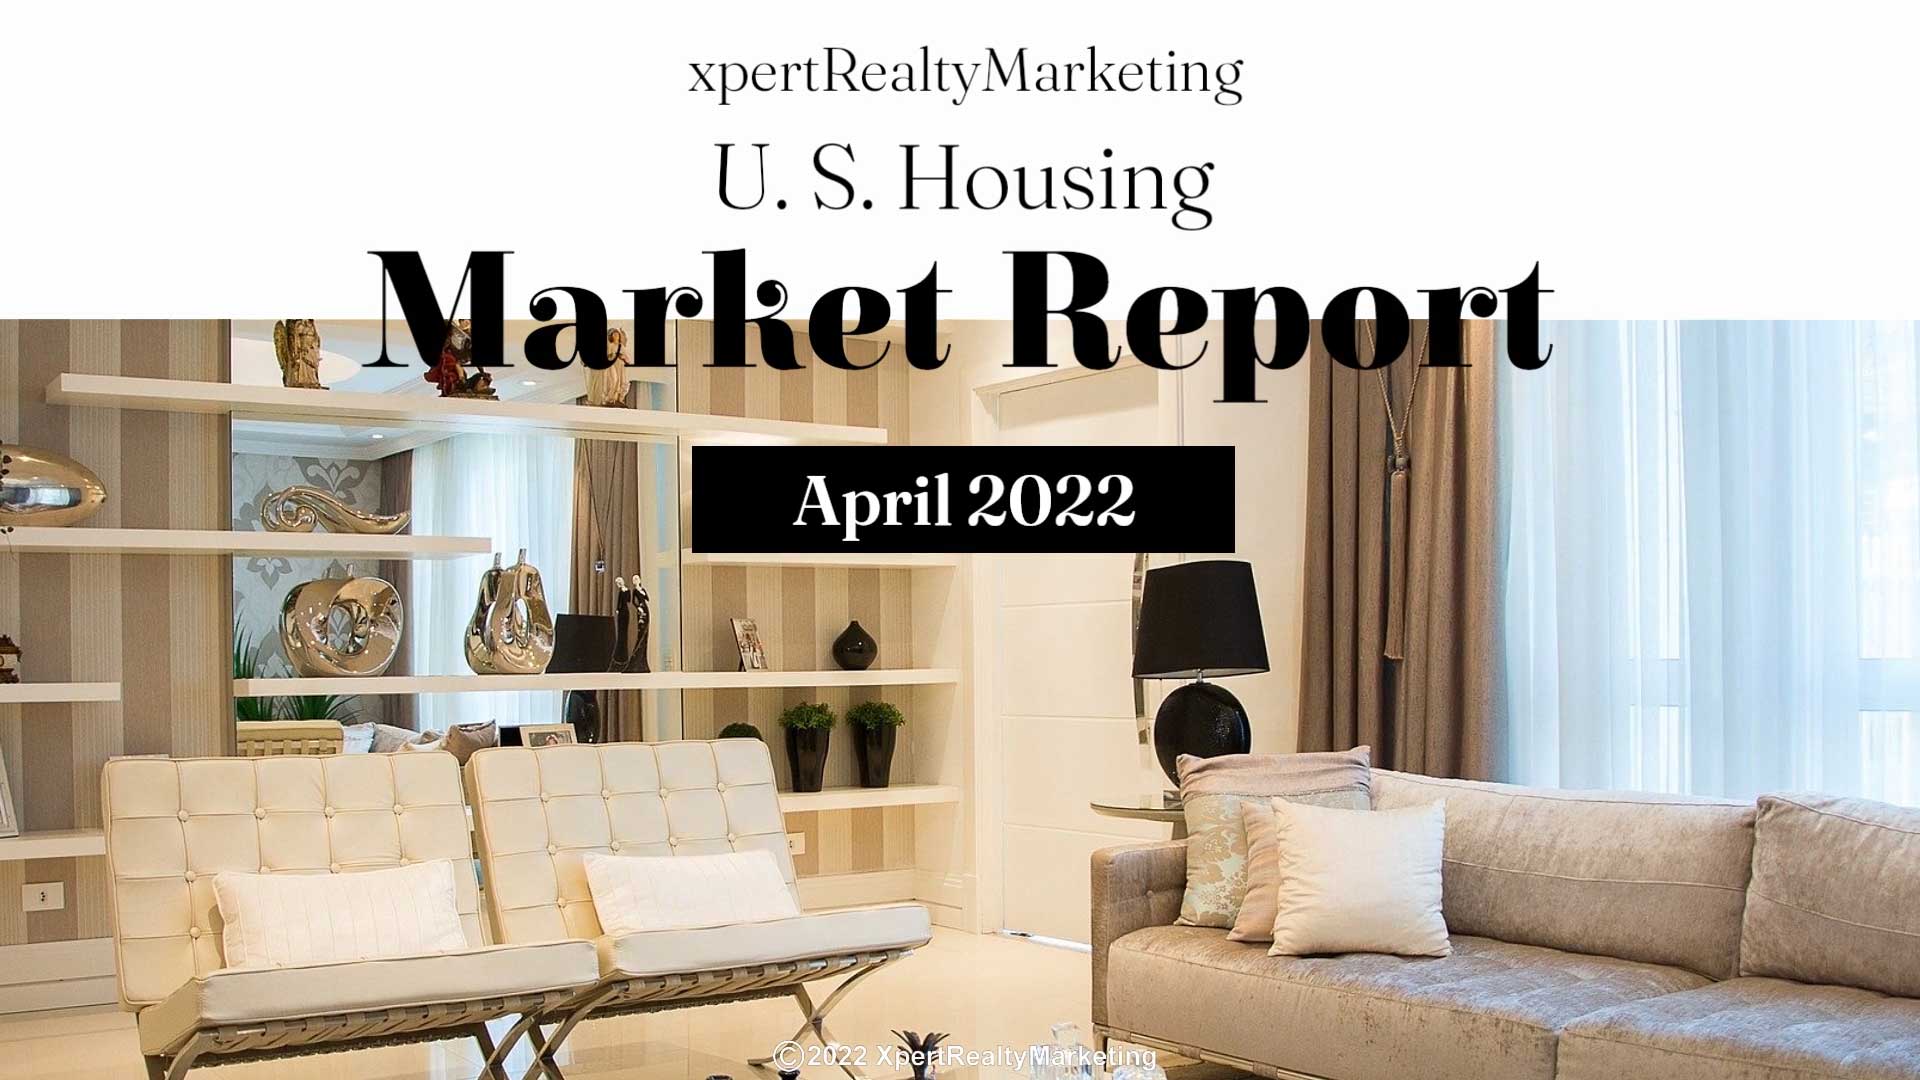 April 2022 U.S. Housing Market Report Video